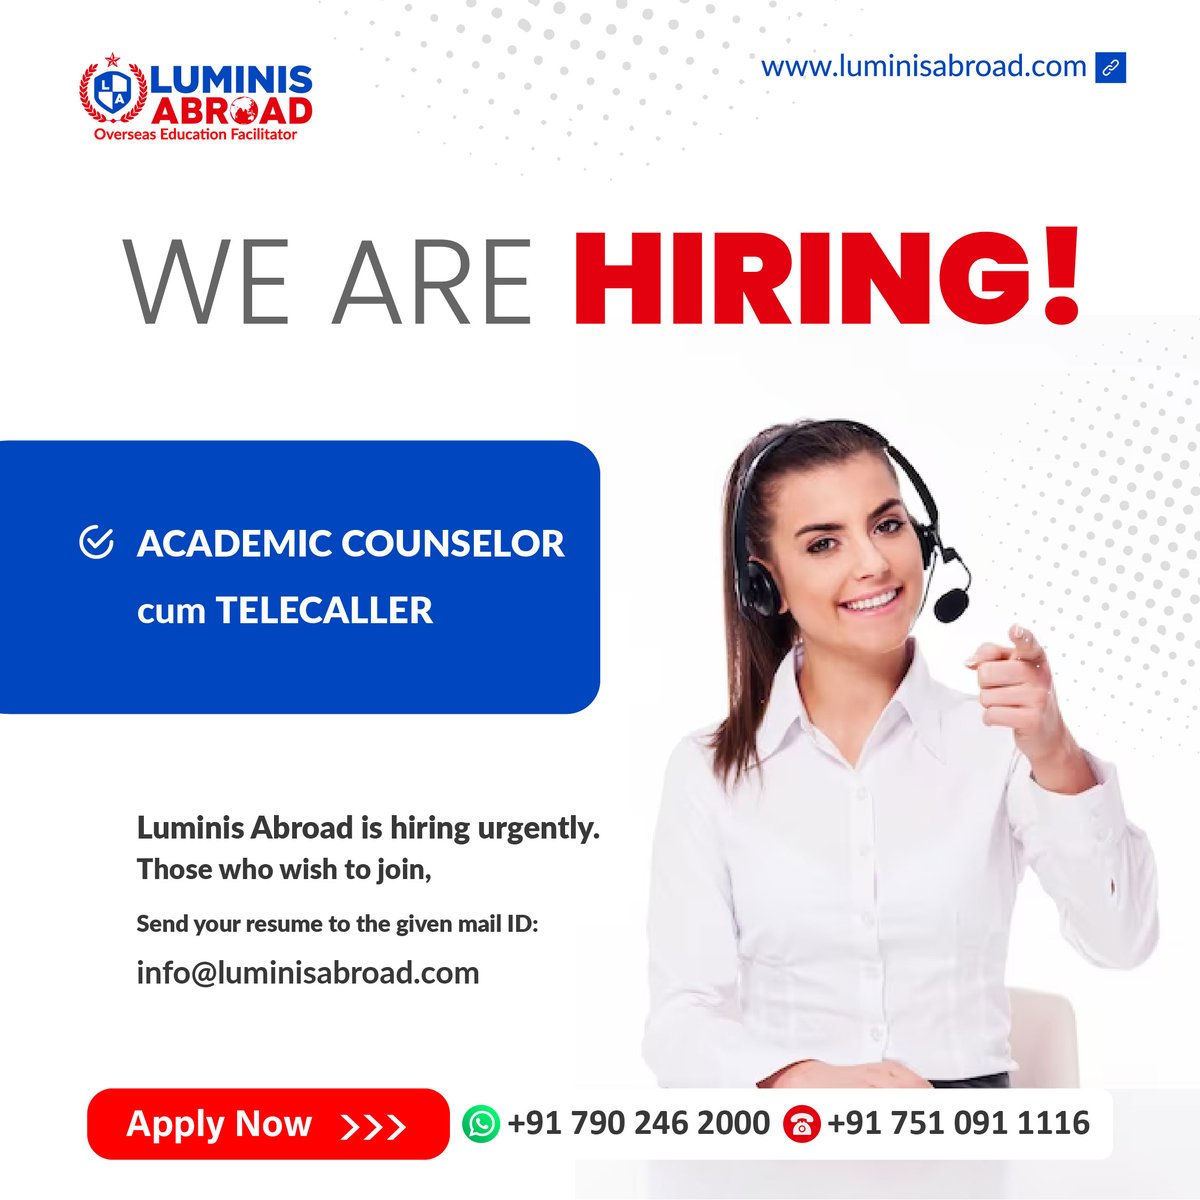 We are hiring urgently.
Those who wish to join,

Send your resume to wa.me/7902462000

#keralavacancy #jobvacancykerala #jobseekerskerala #freshersjob #luminisabroad #kochi